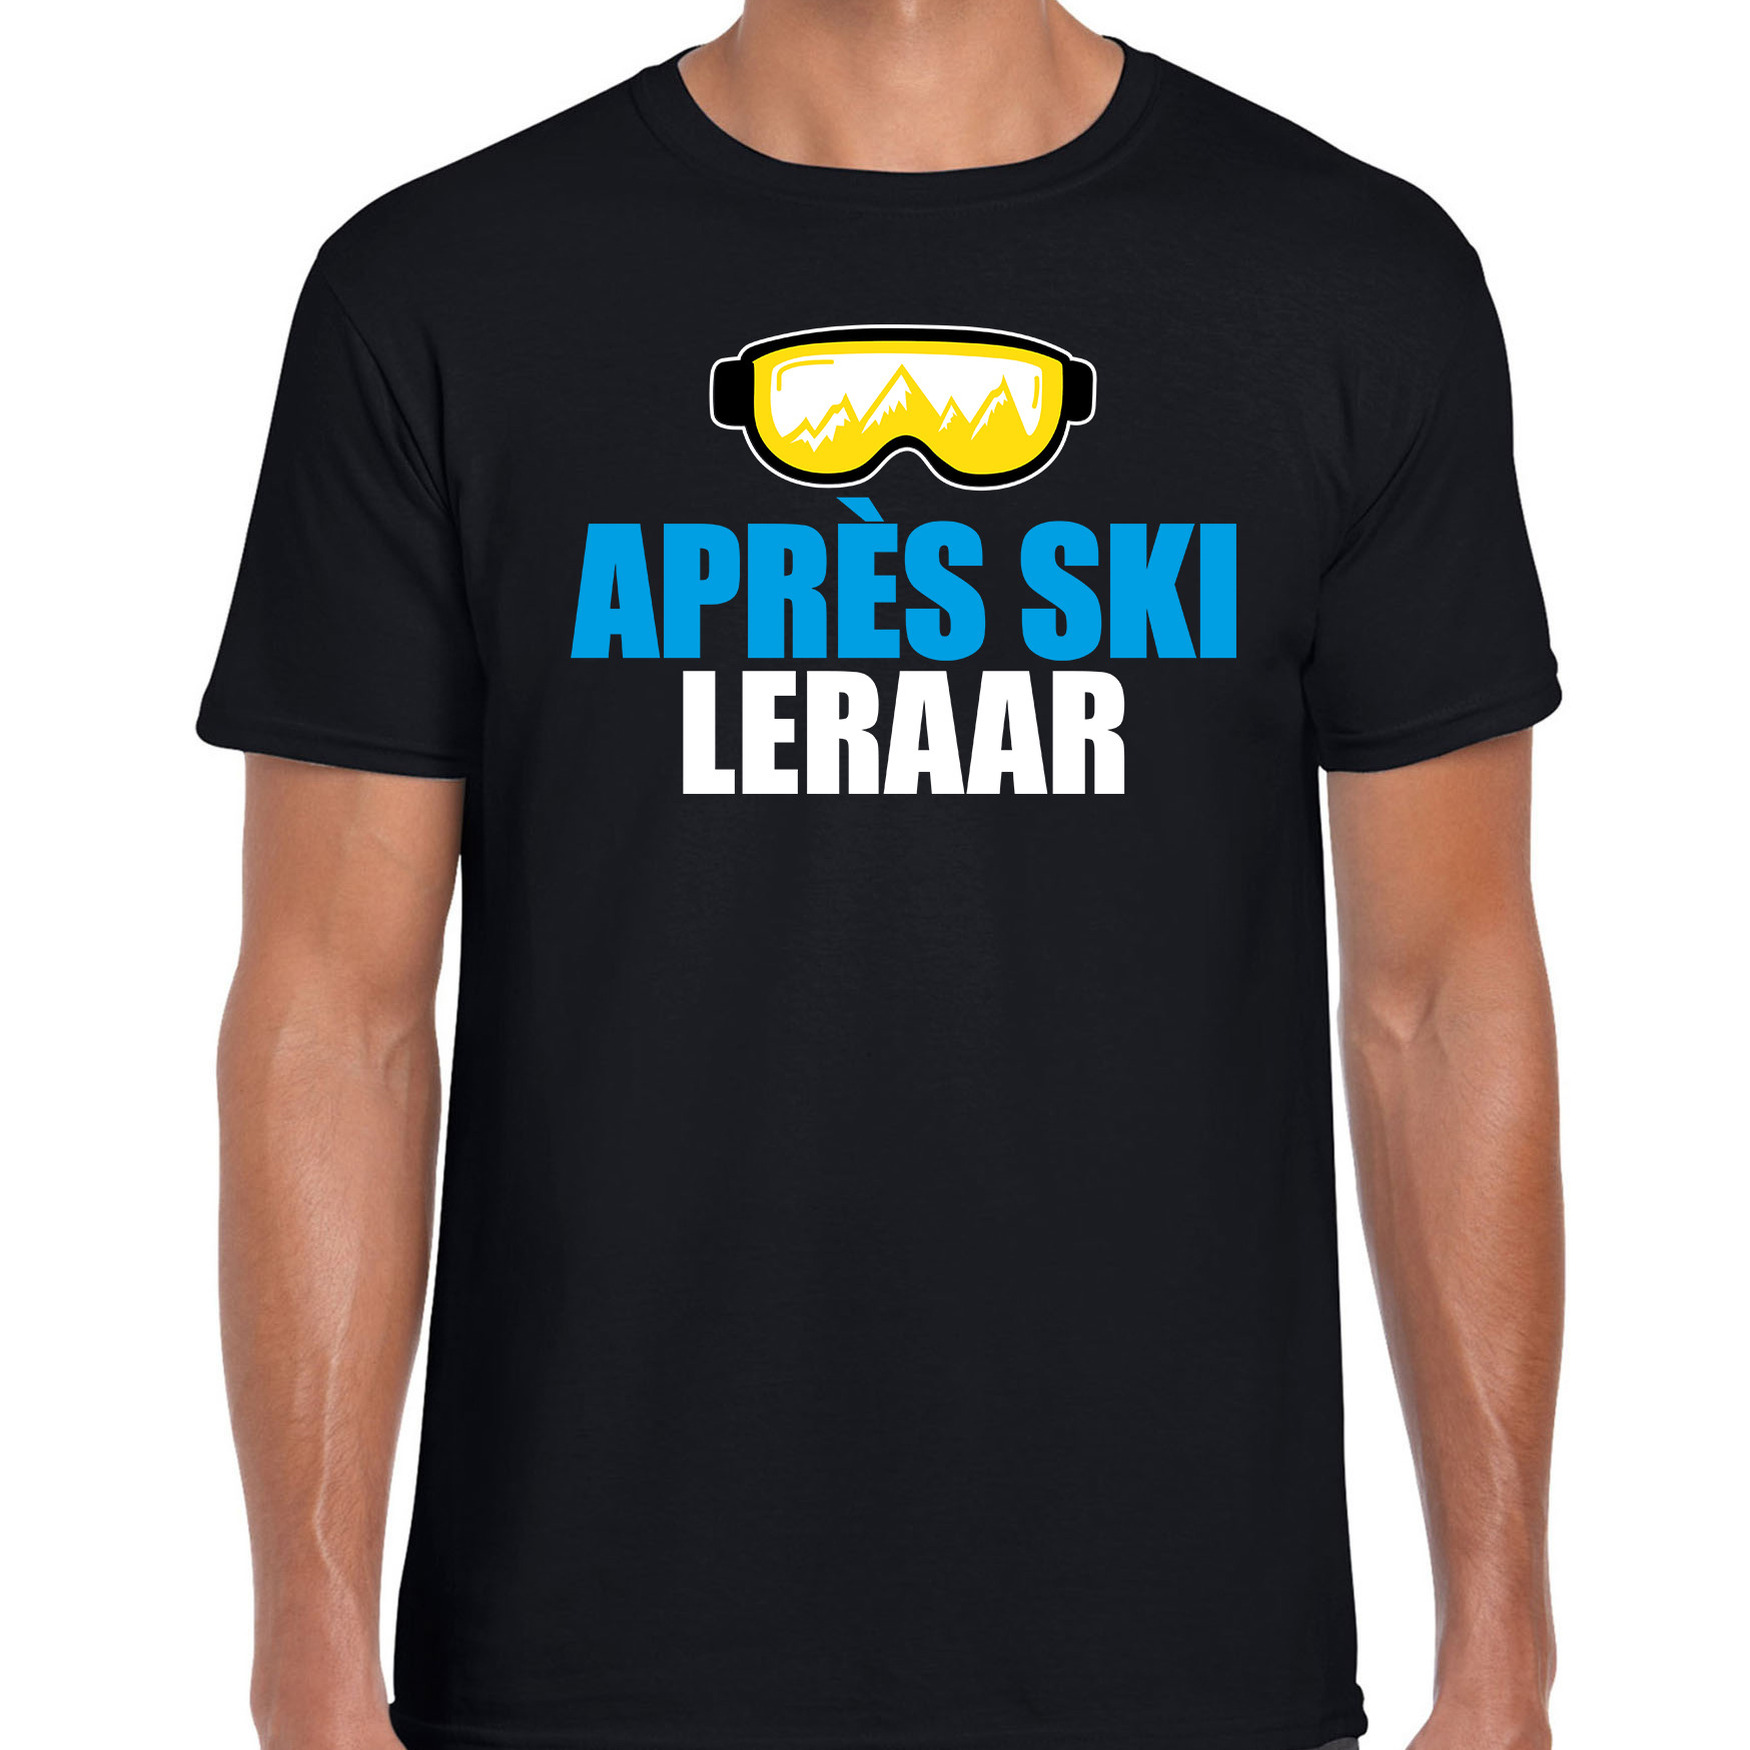 Apres ski t-shirt Apres ski leraar zwart heren Wintersport shirt Foute apres ski outfit